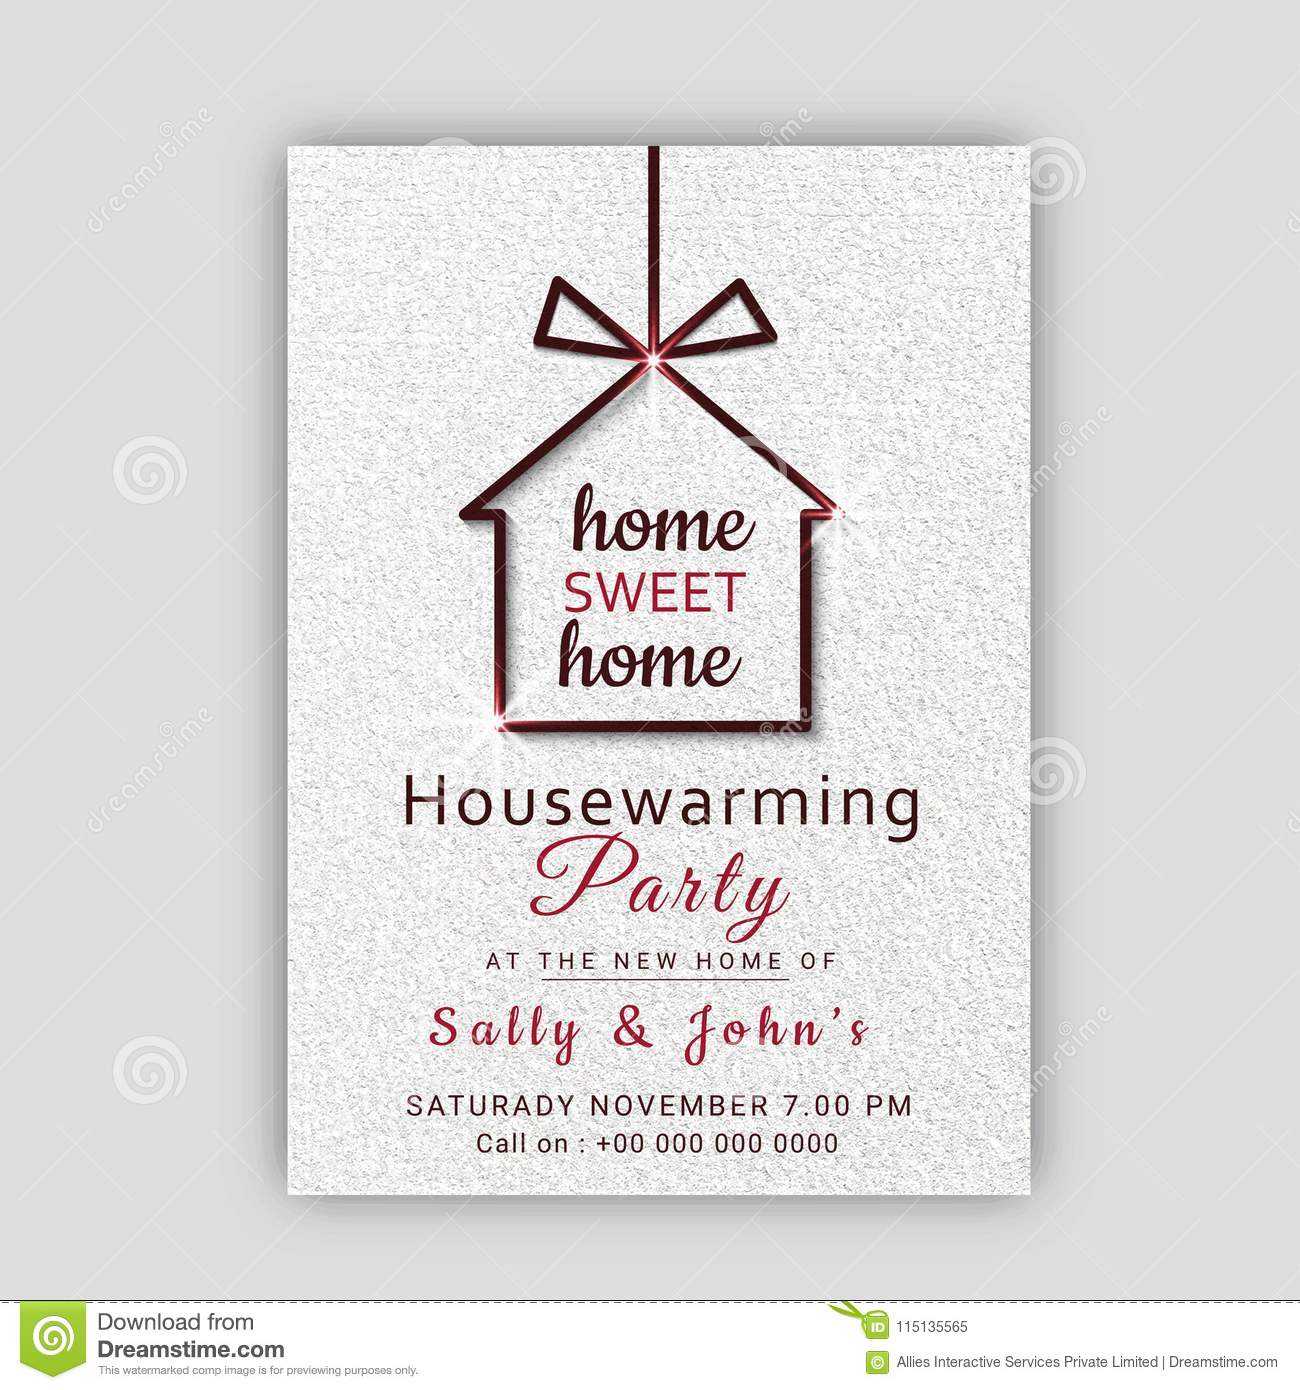 Housewarming Party Invitation Card Design. Stock For Free Housewarming Invitation Card Template